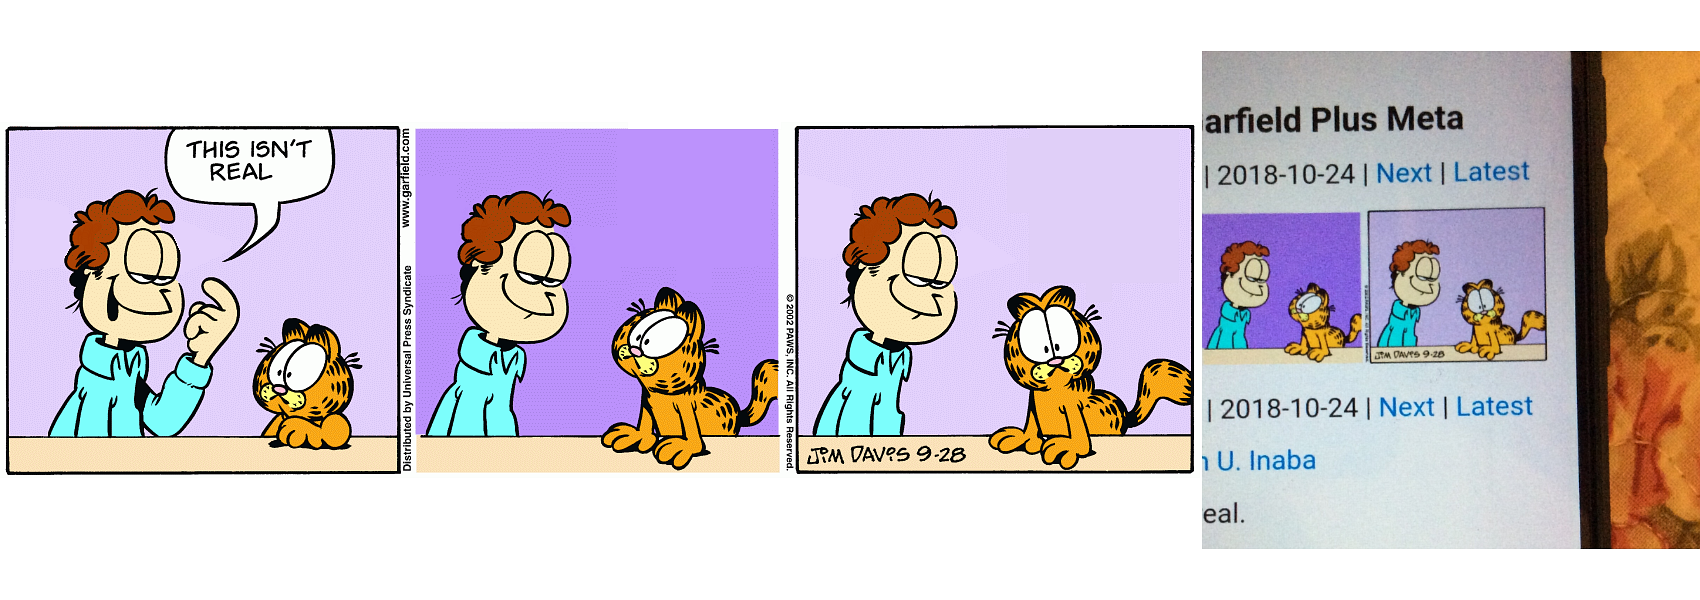 Garfield Plus Meta